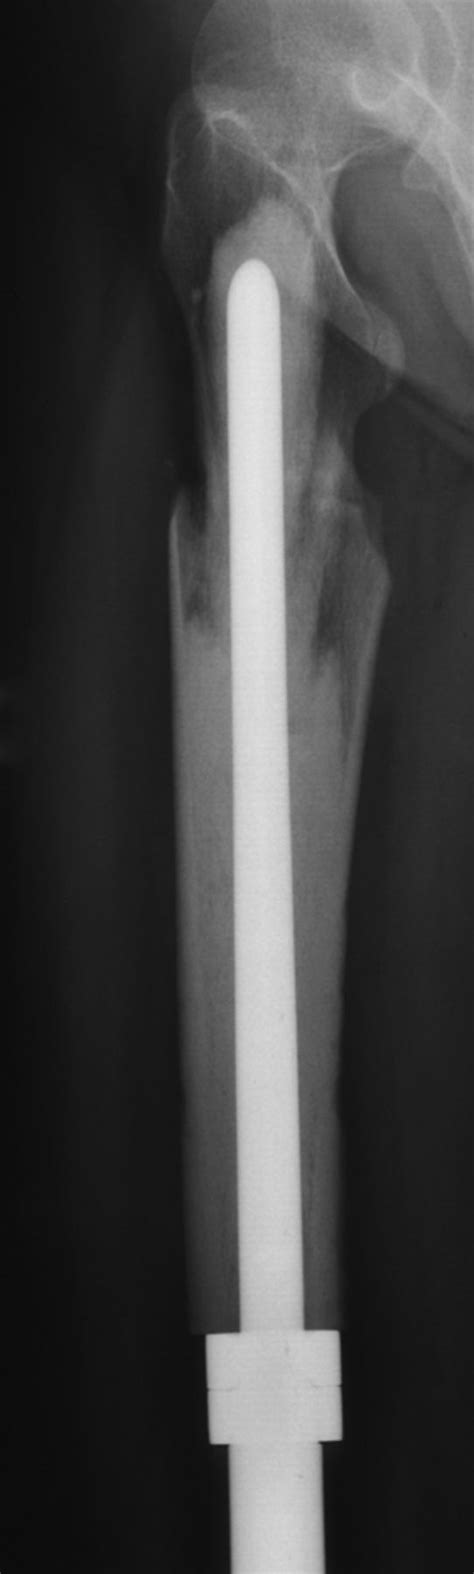 Cortical Strut Bone Grafting And Long Stem Endoprosthetic